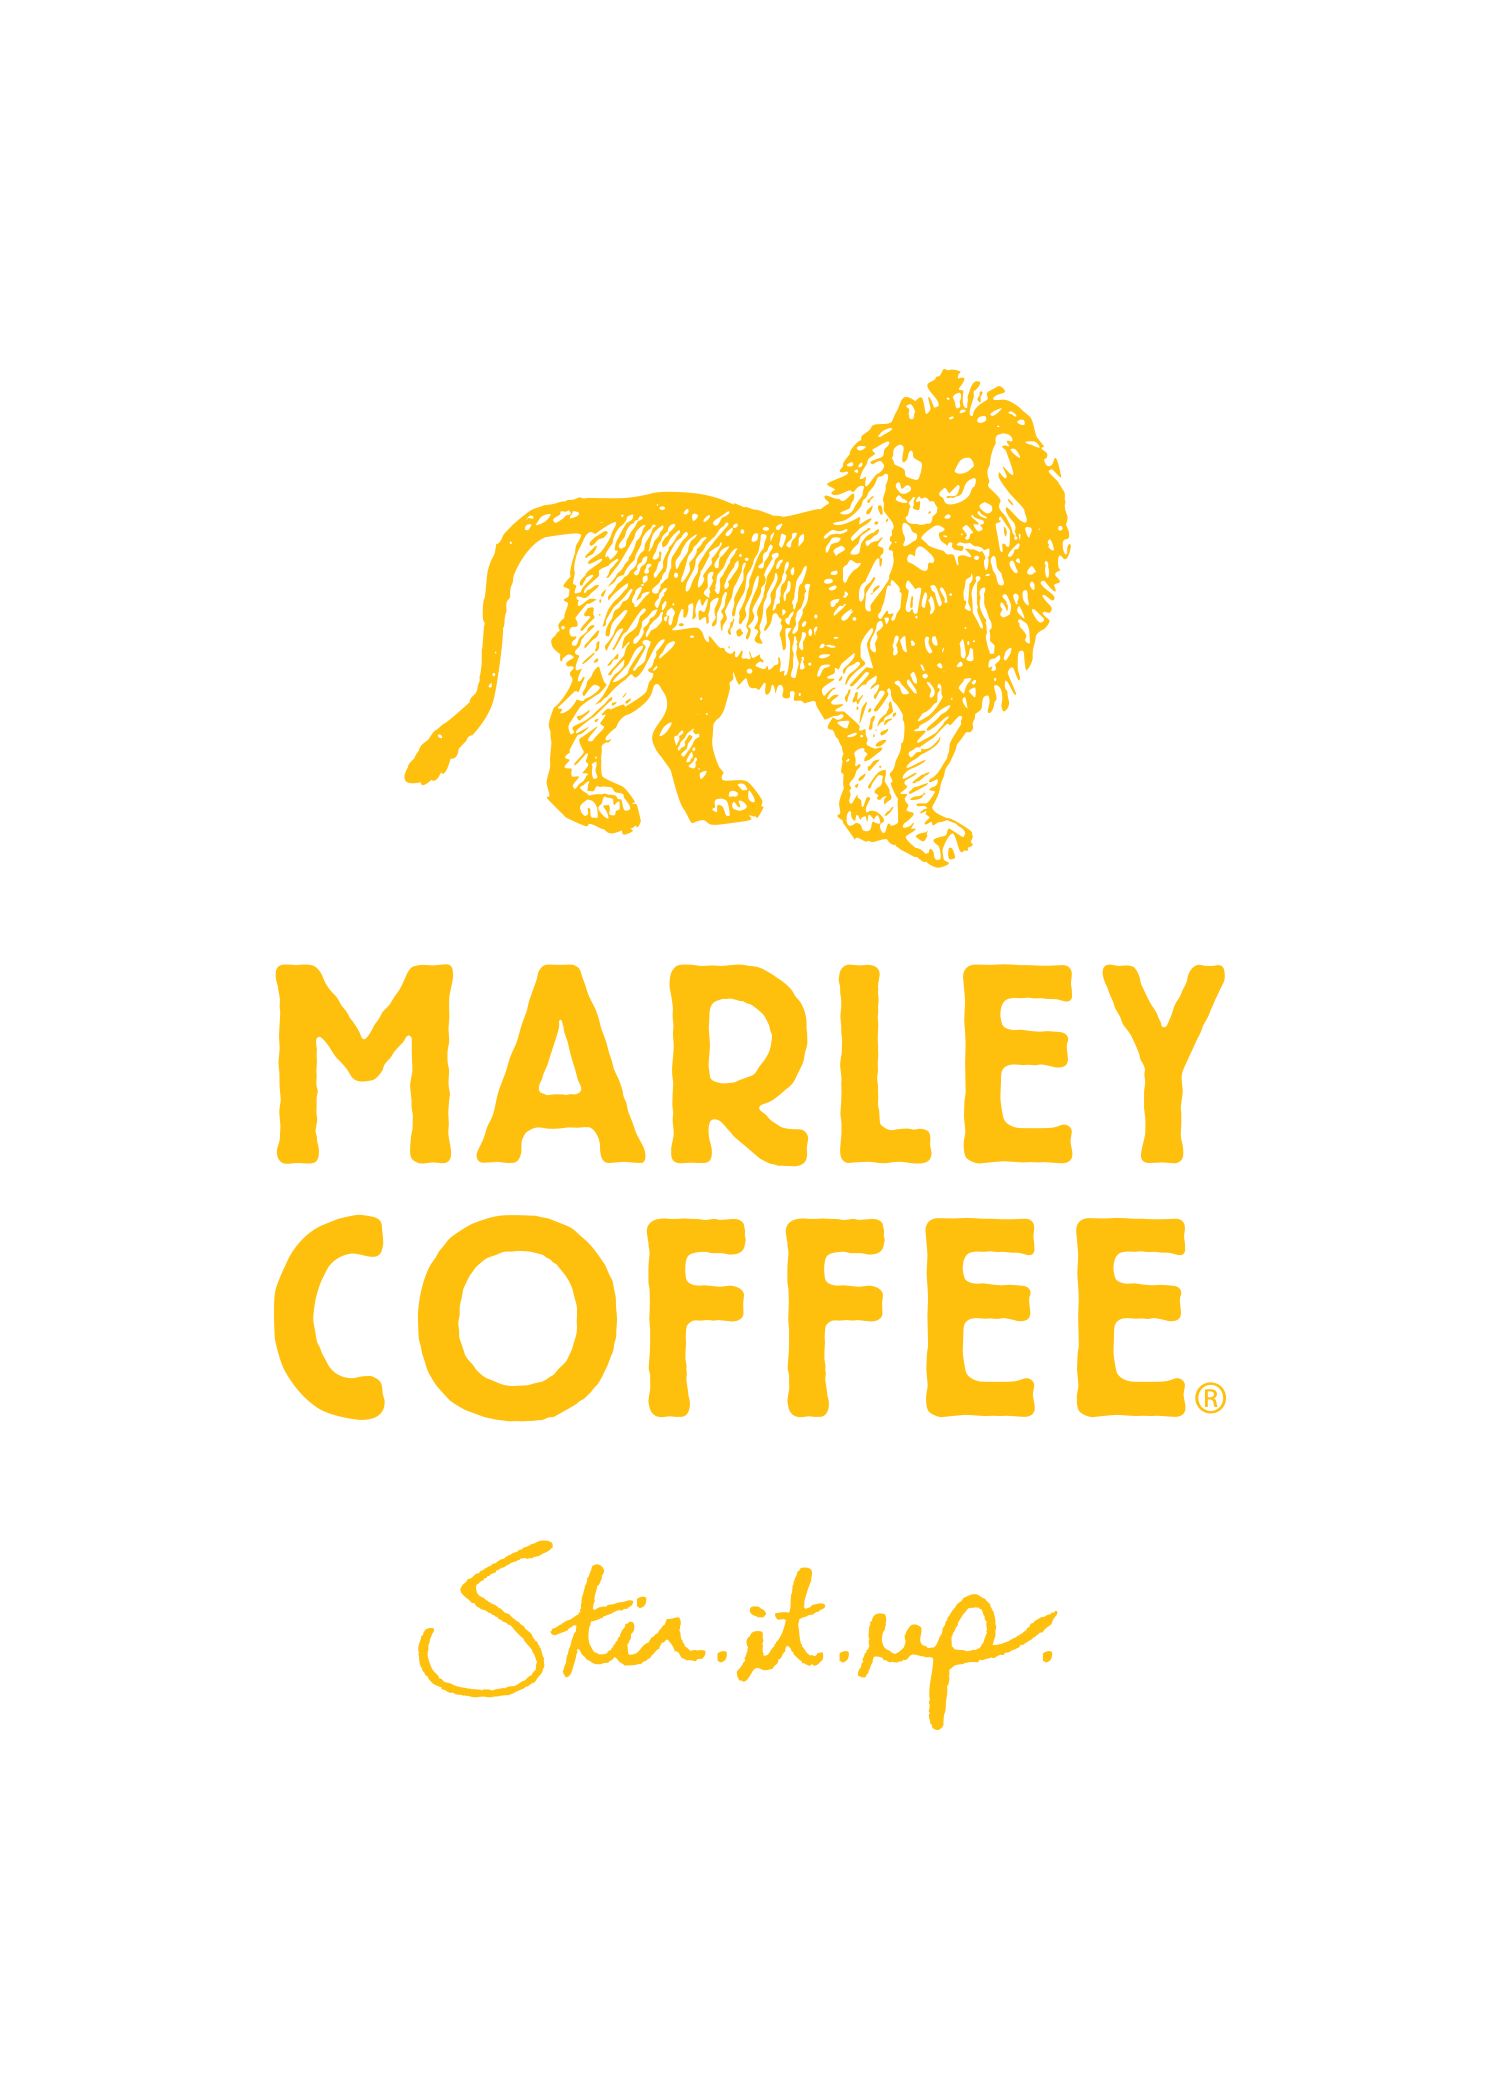 Marley Coffee Launch